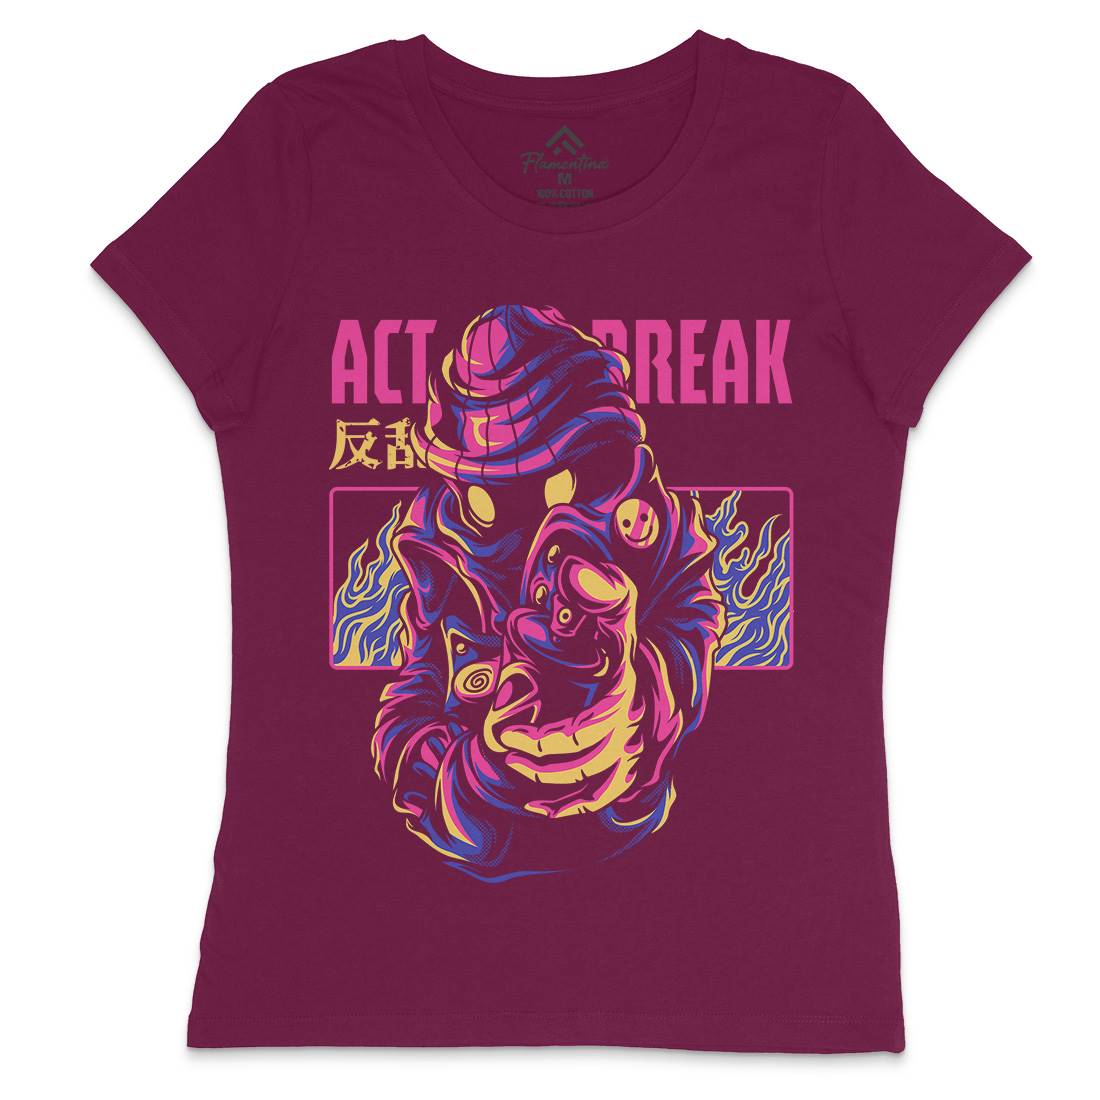 Act Break Womens Crew Neck T-Shirt Graffiti D700